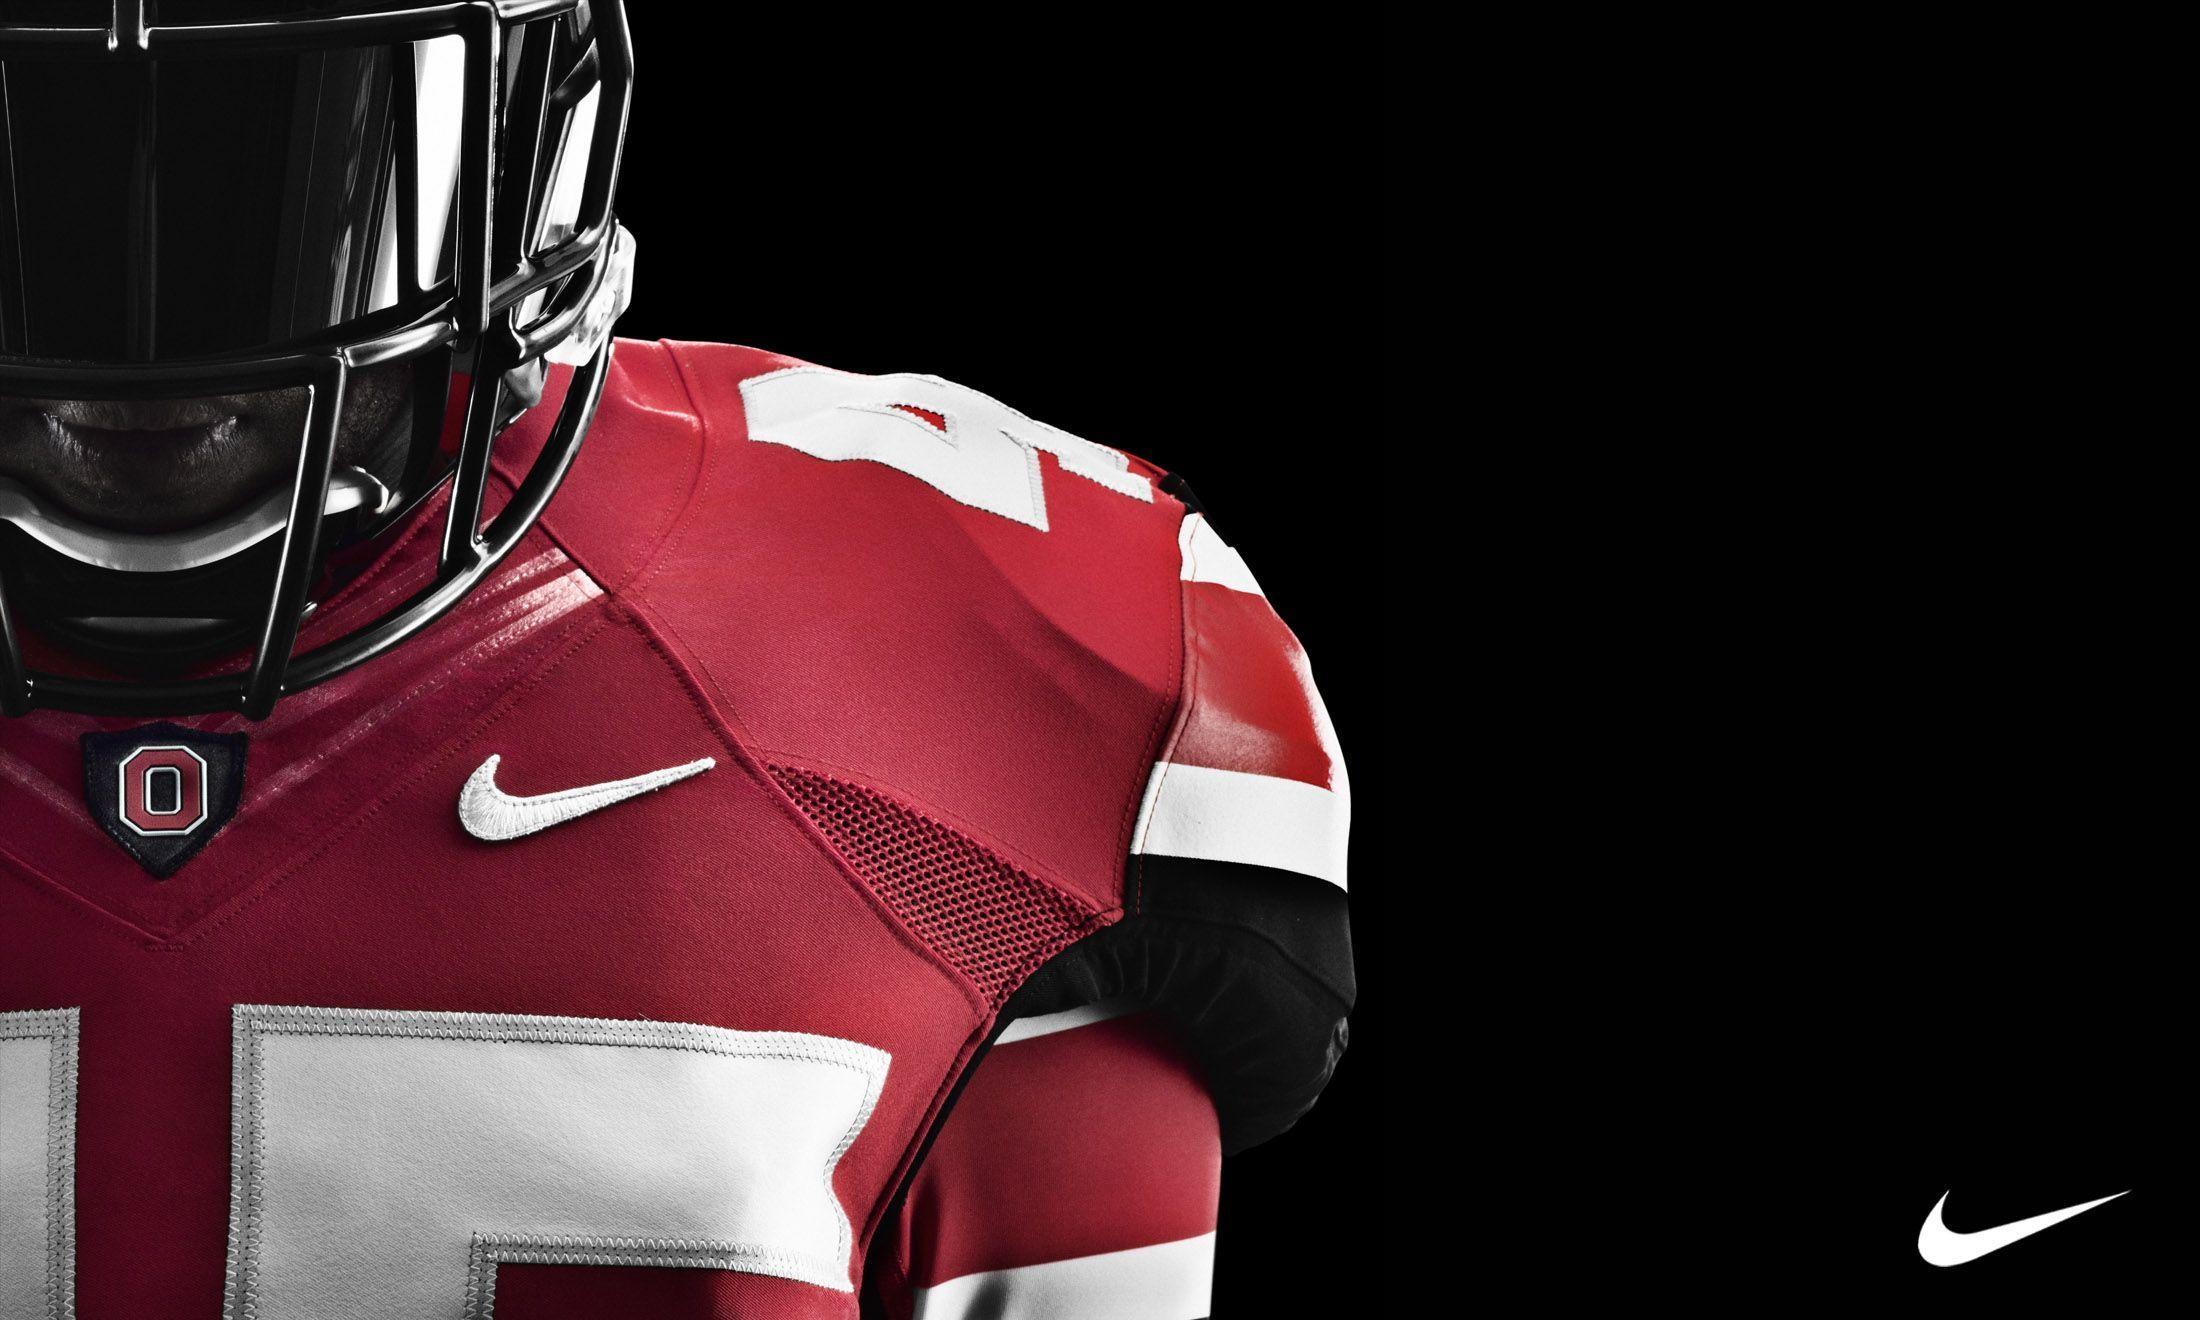 NCAA Football Uniform Nike Pro wallpaper HD. Free desktop